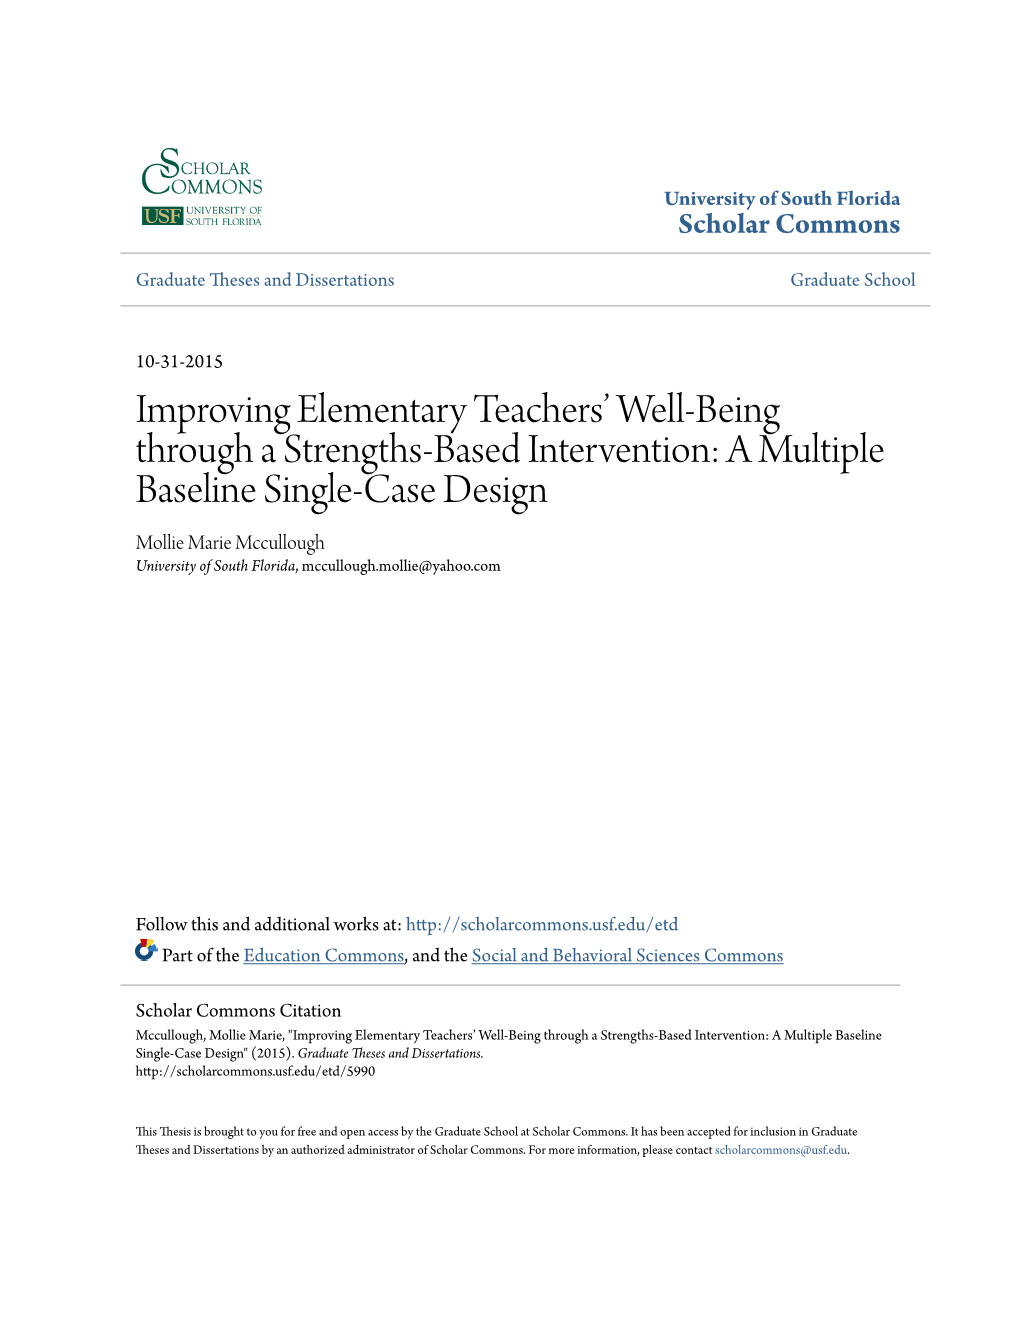 Improving Elementary Teachers' Well-Being Through a Strengths